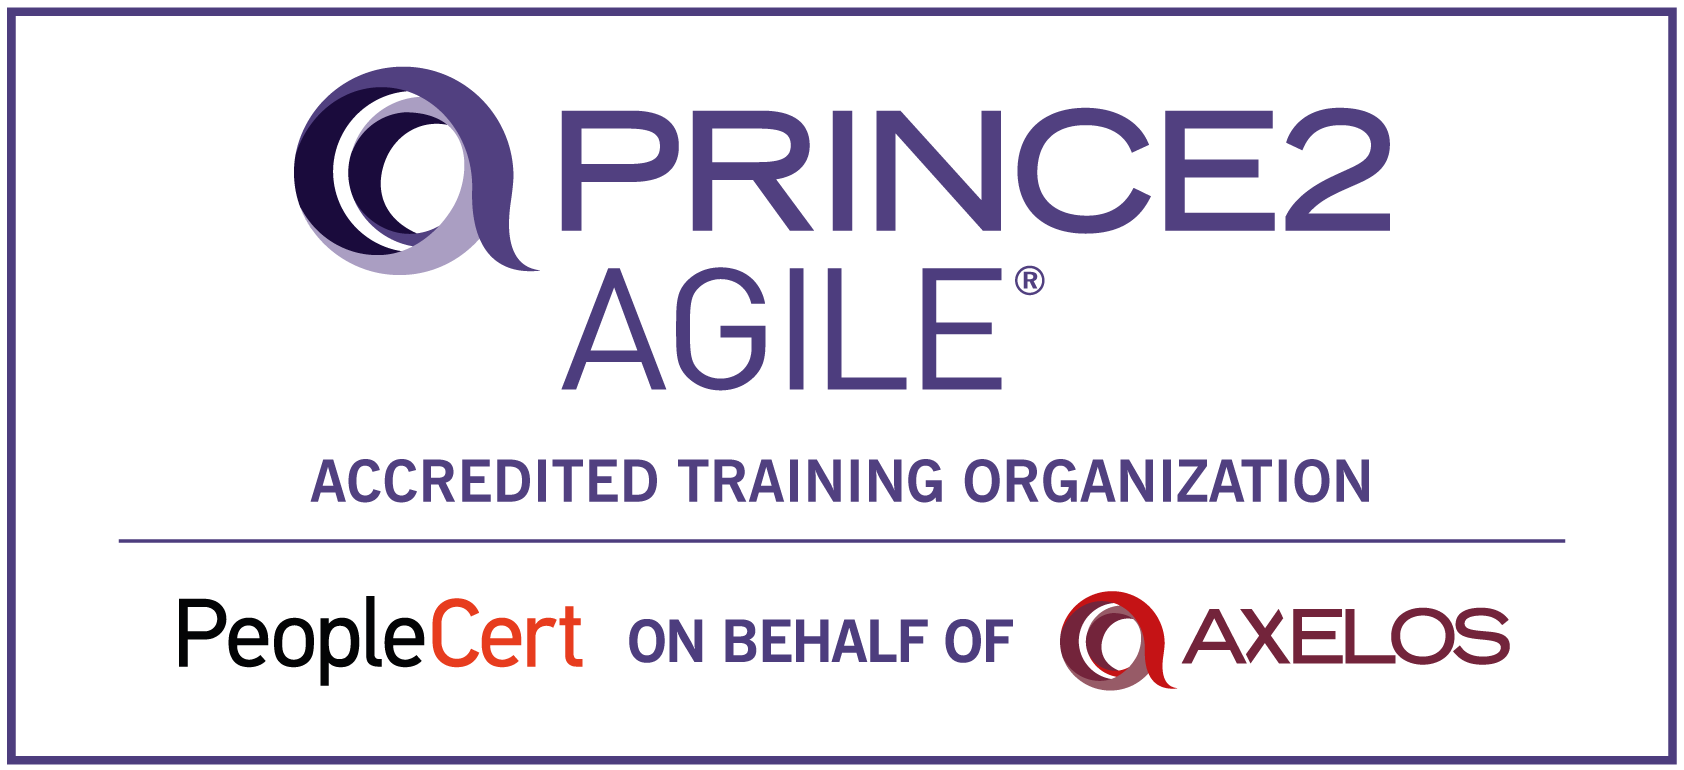 PRINCE2 Agile training course